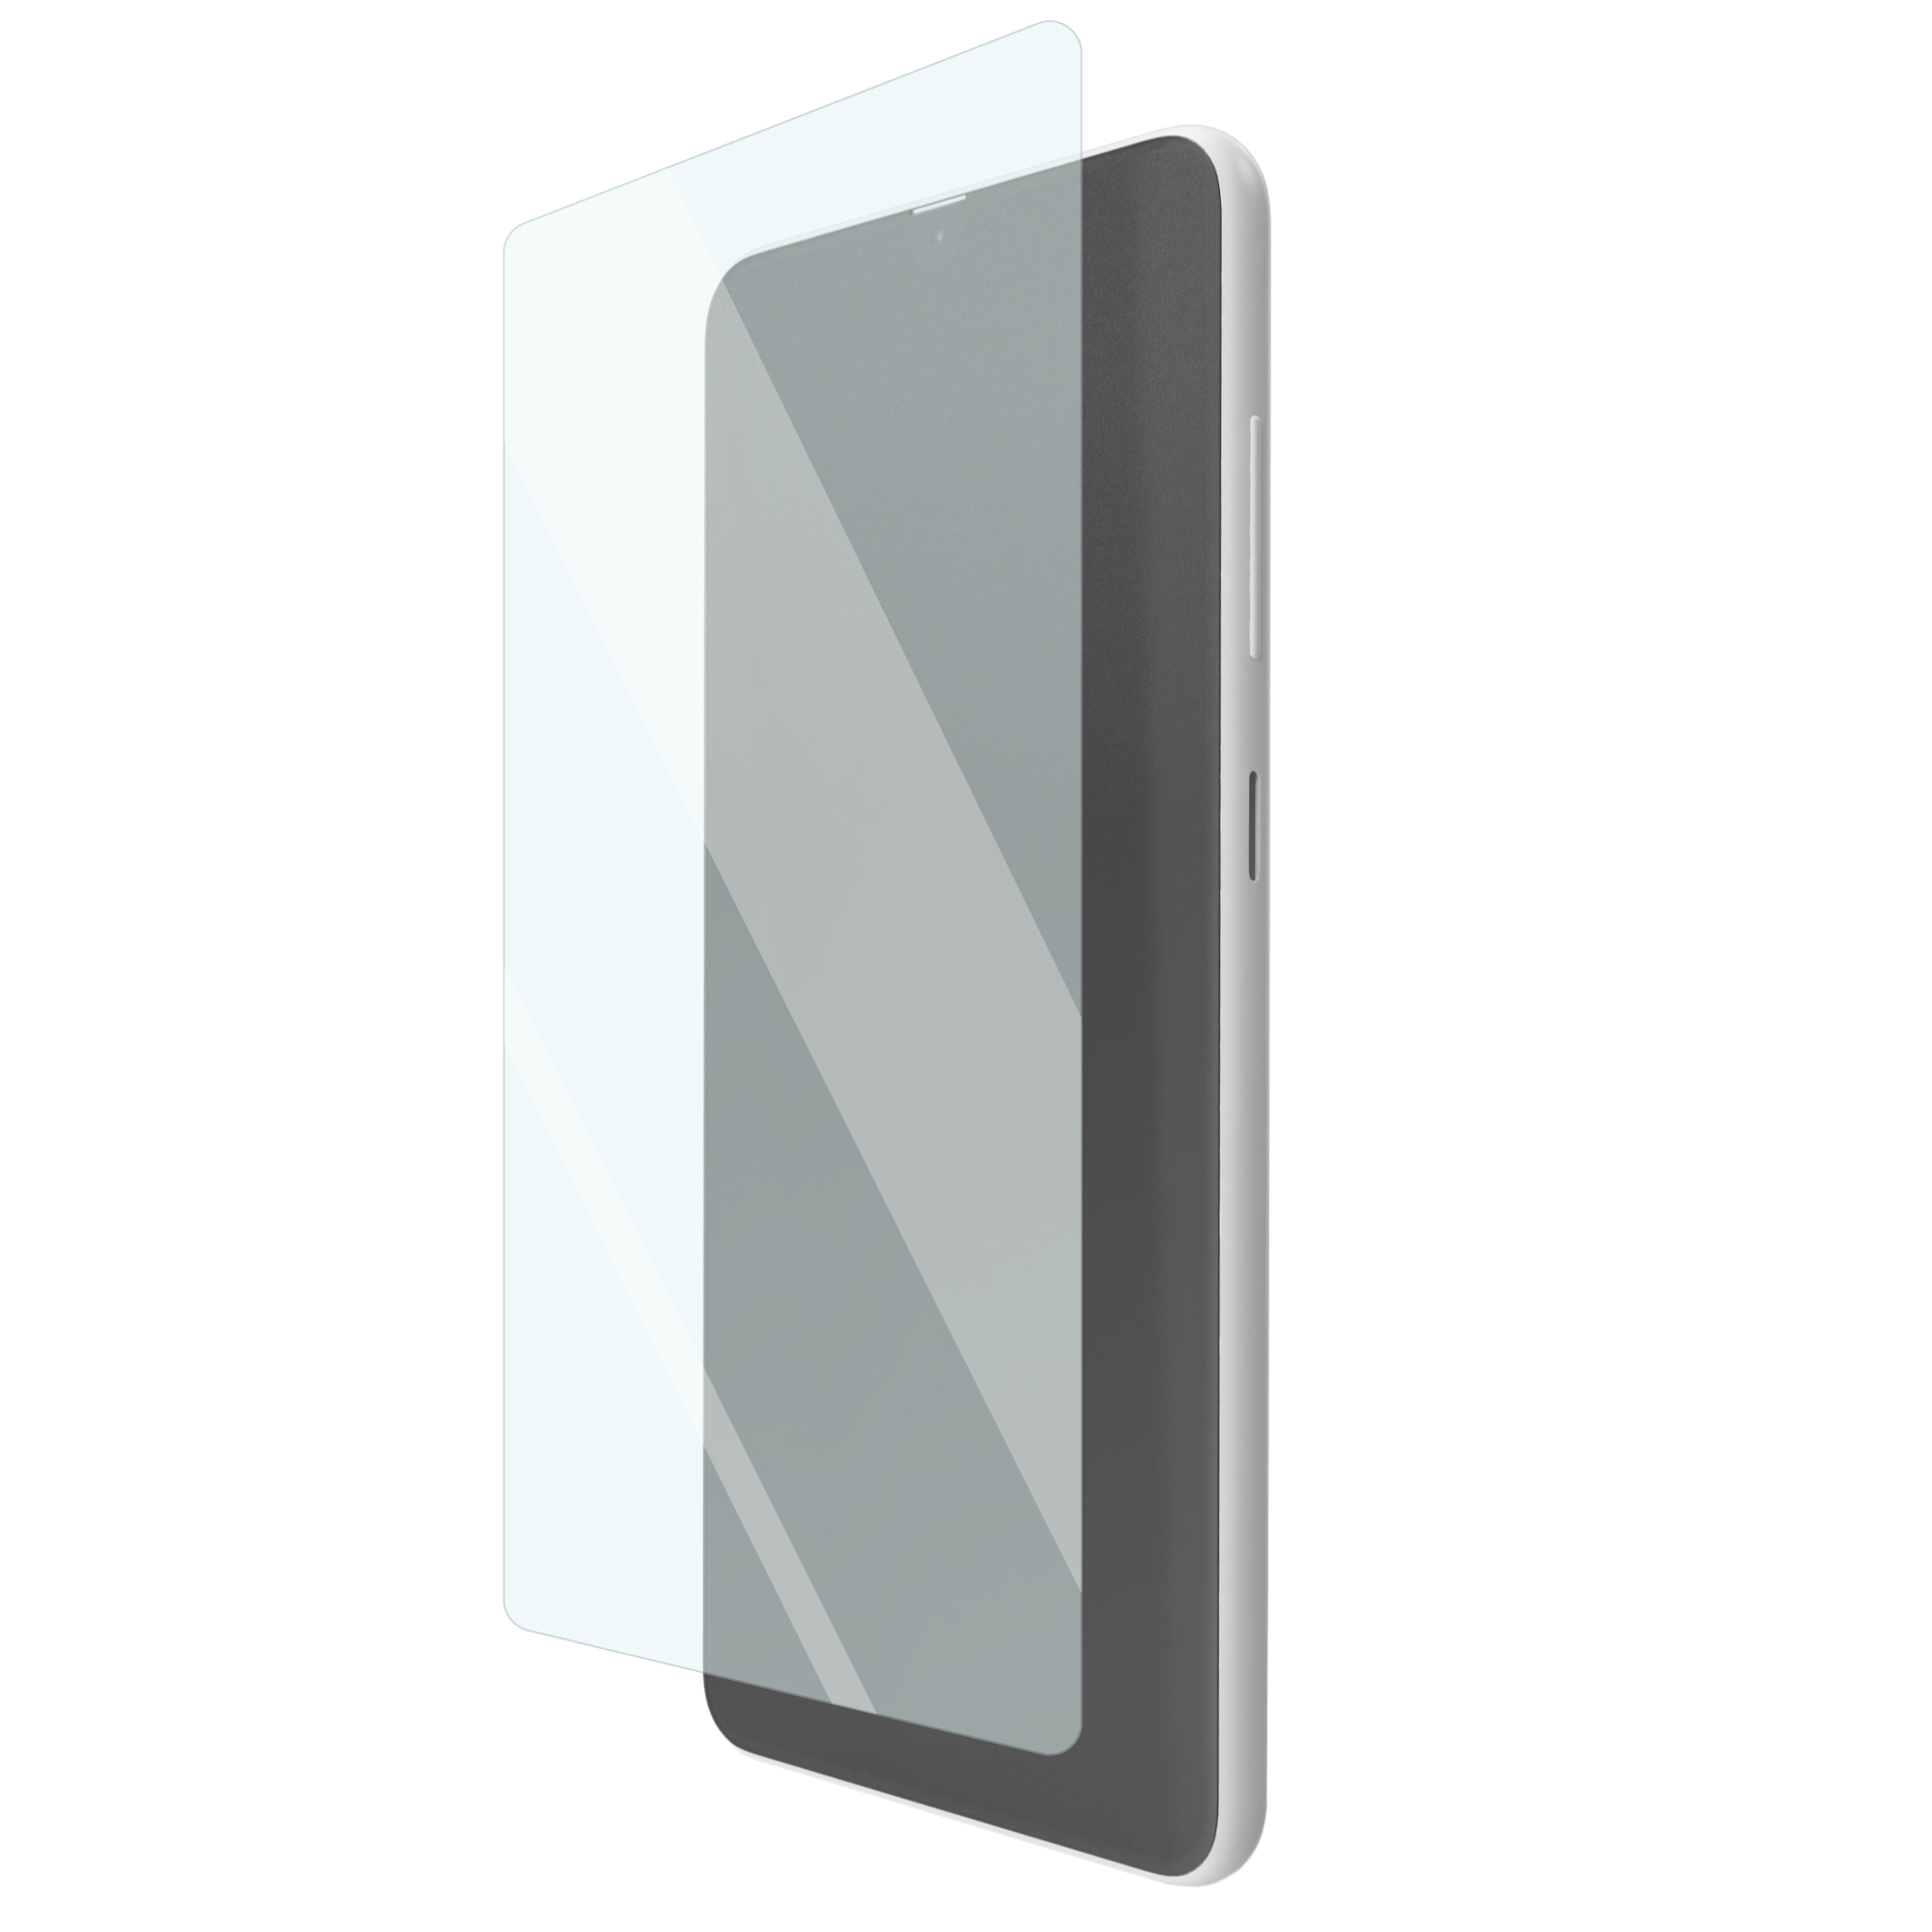 Folie de protectie silicon ShieldUP HiTech Regenerable pentru Apple iPhone 13 Pro thumb